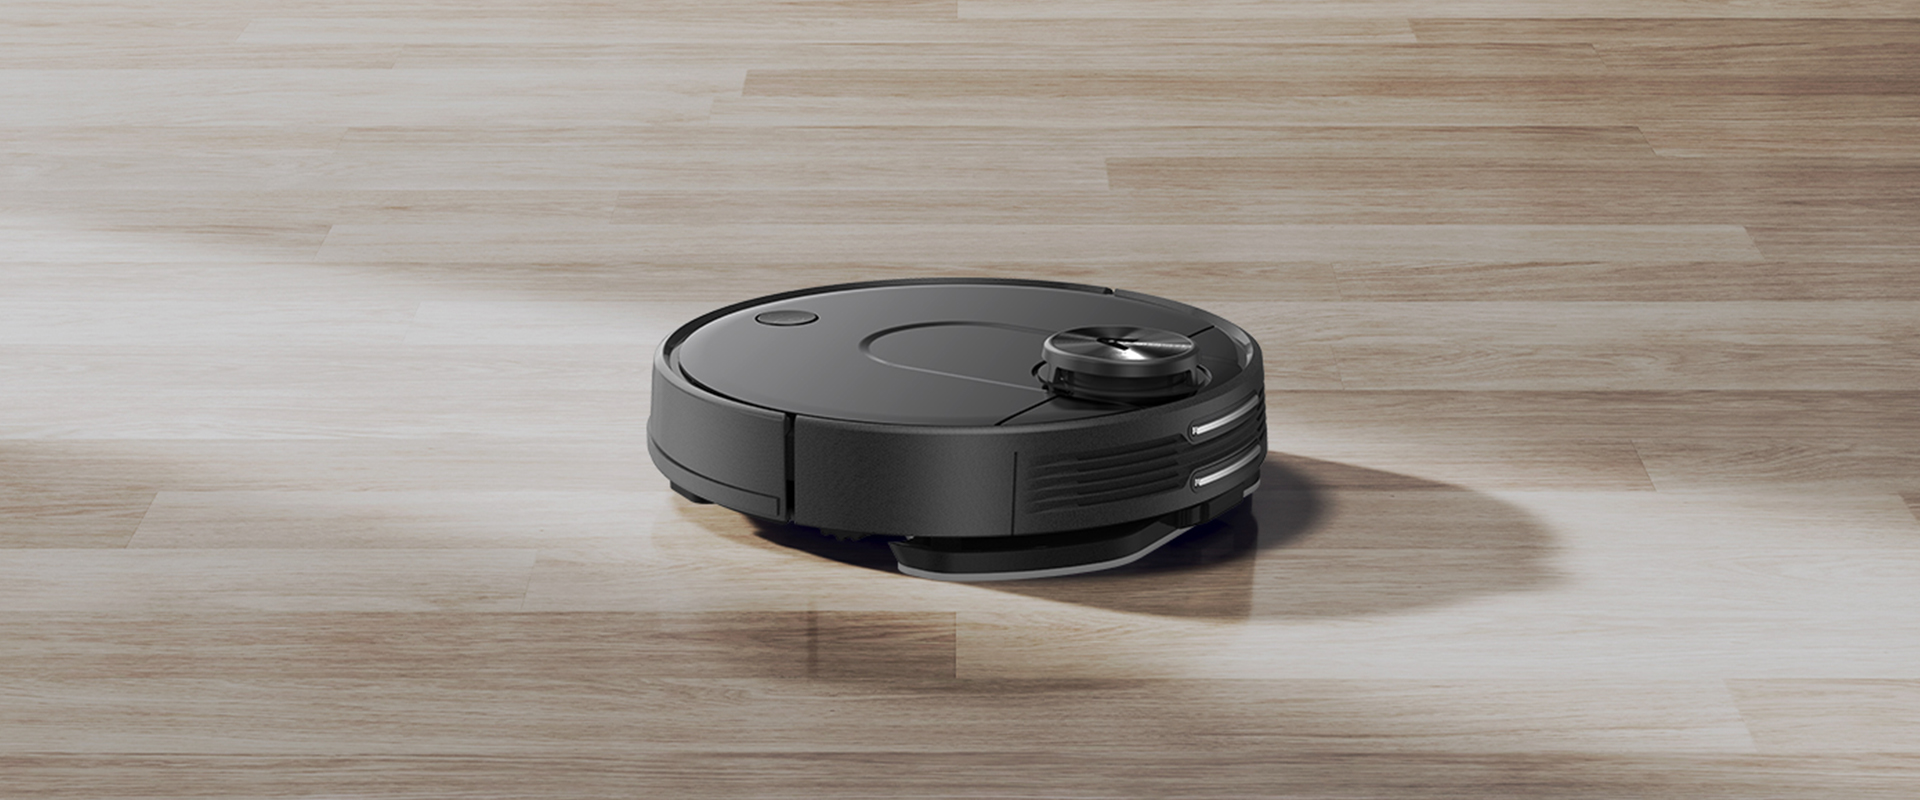 Viomi V2 MAX best robot vacuum for hard wood floors